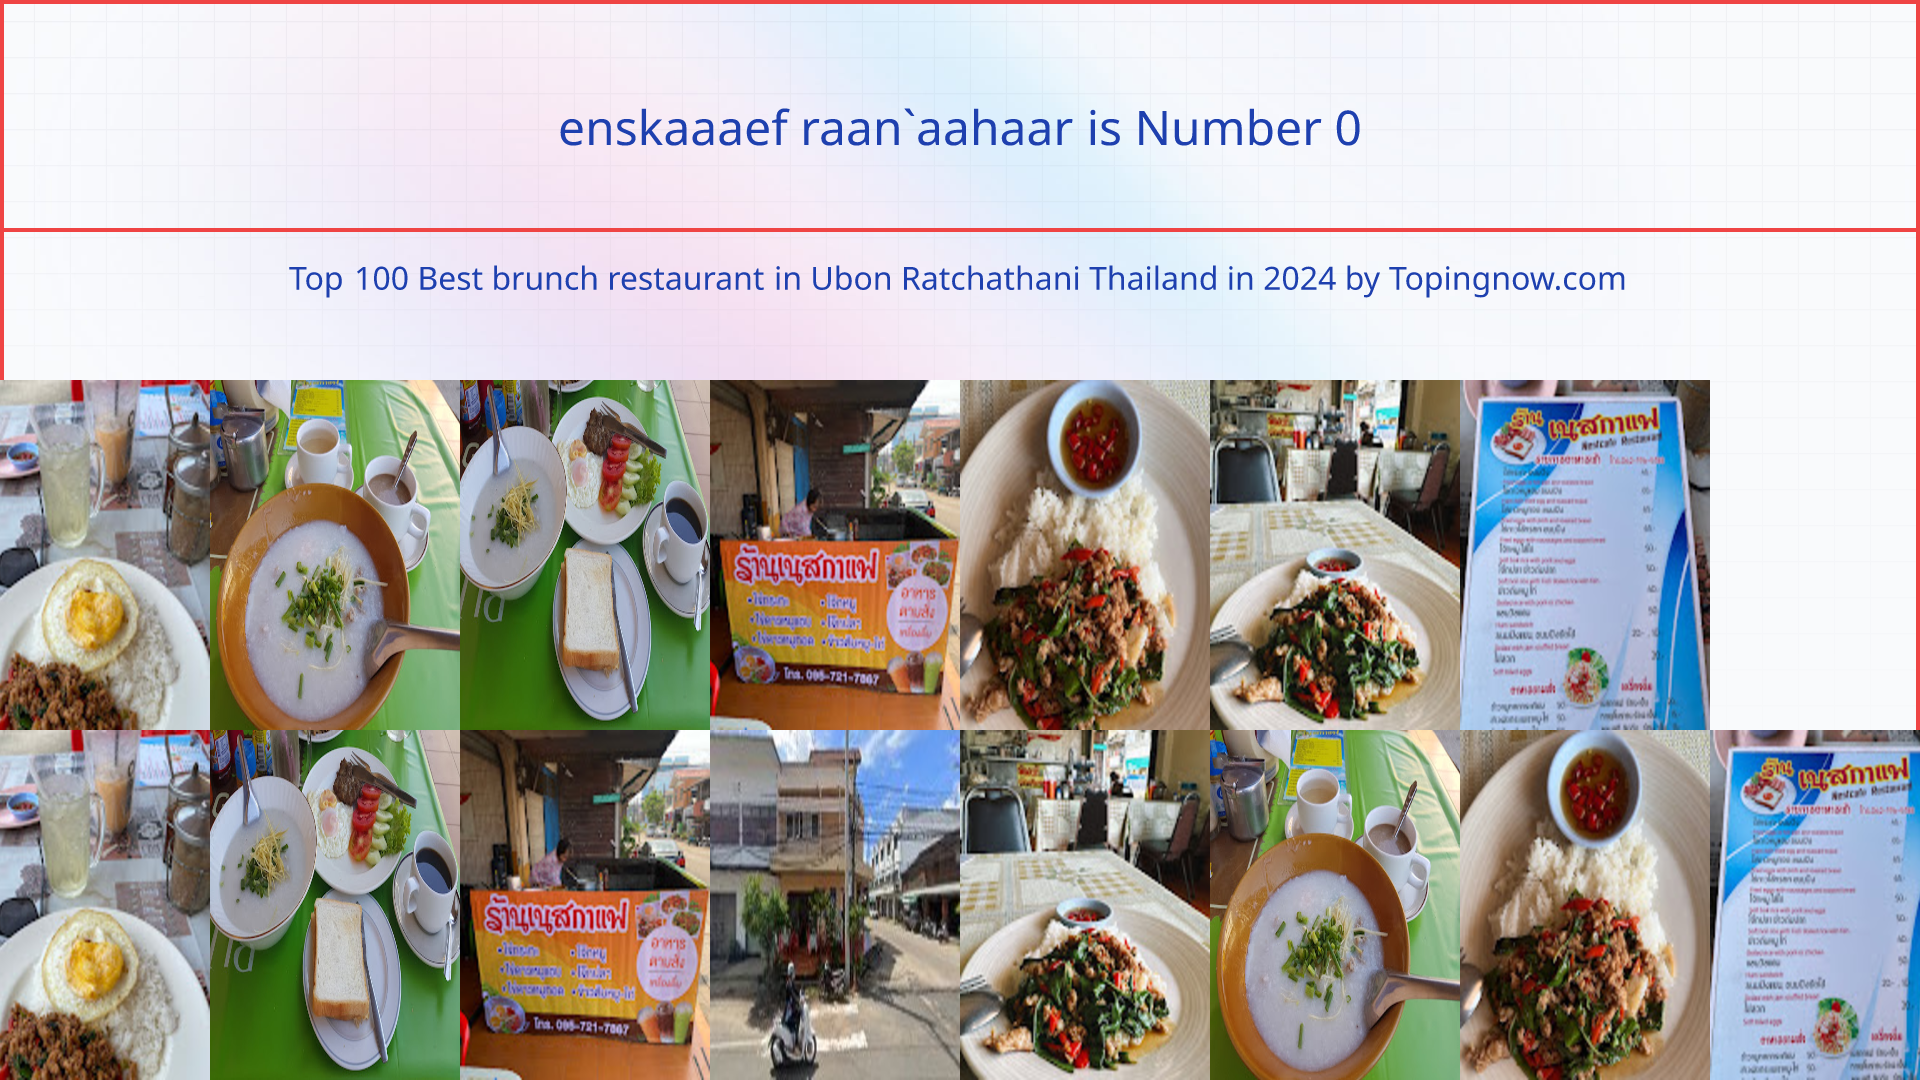 enskaaaef raan`aahaar: Top 100 Best brunch restaurant in Ubon Ratchathani Thailand in 2024